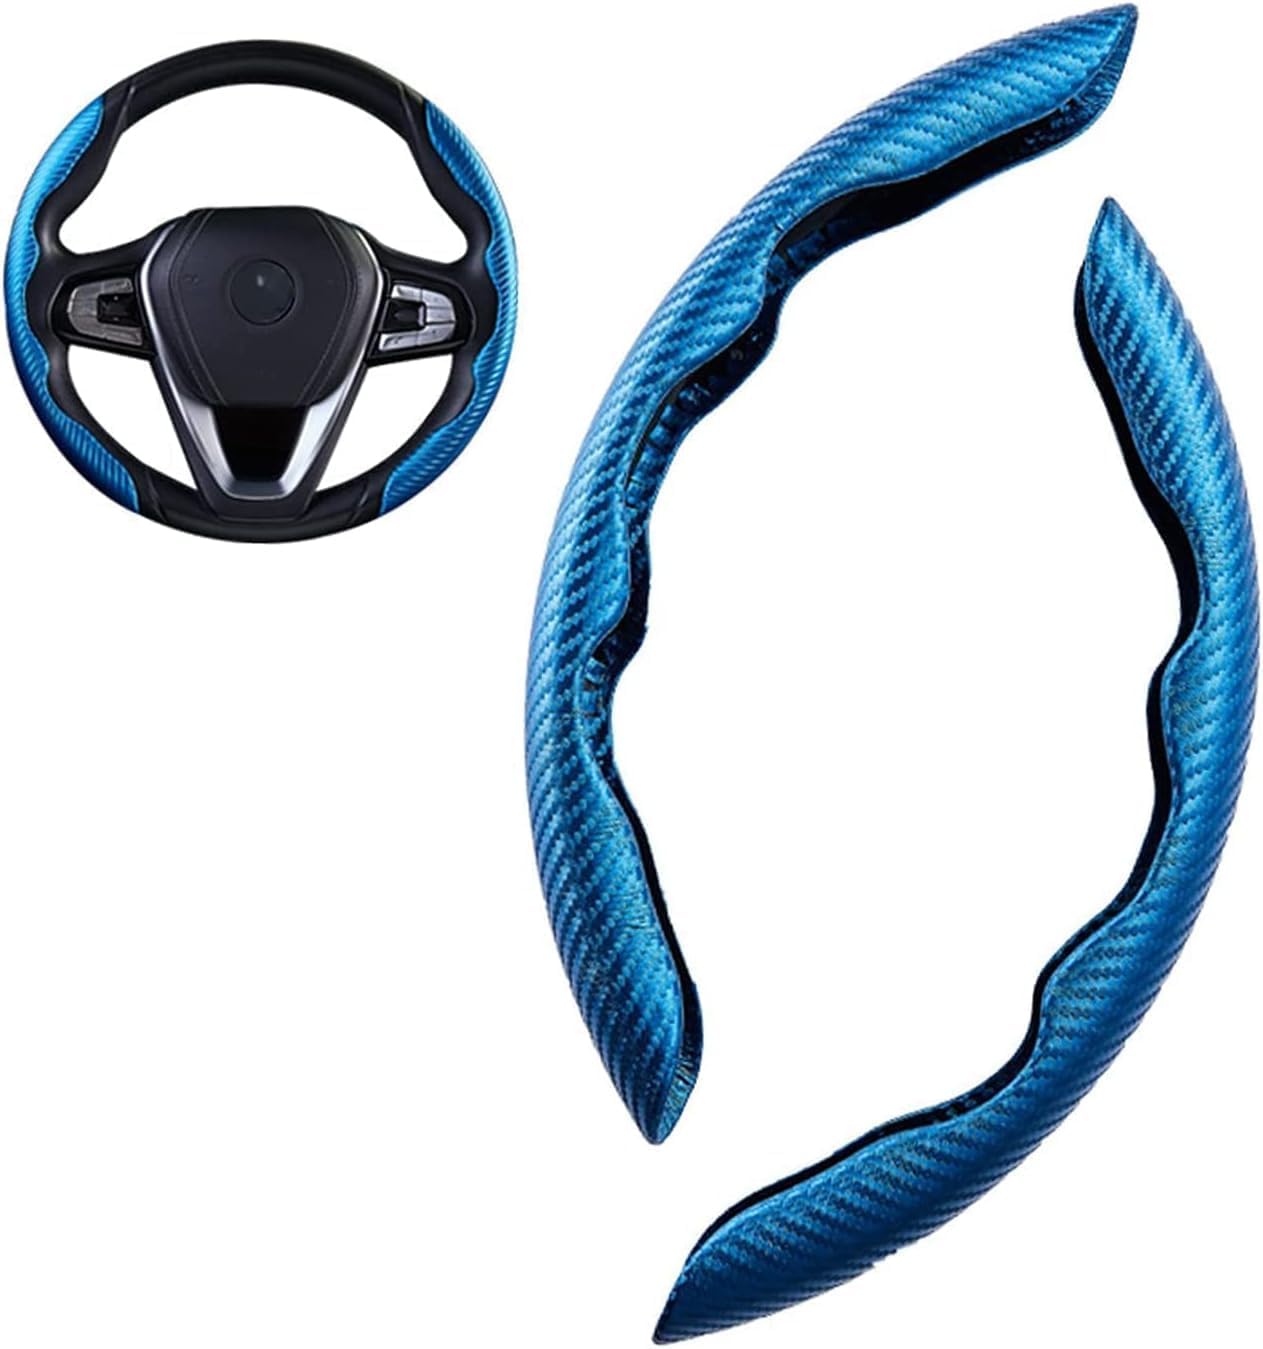 2 Stück Auto Kohlefaser Lenkradbezug für Suzuki Swift SX4 Jimny Vitara Baleno Alto Samurai Ignis,Segmented Anti-Rutsch Lenkradabdeckung Auto Innenraum Auto Accessoires,C-Blue von SUKORI